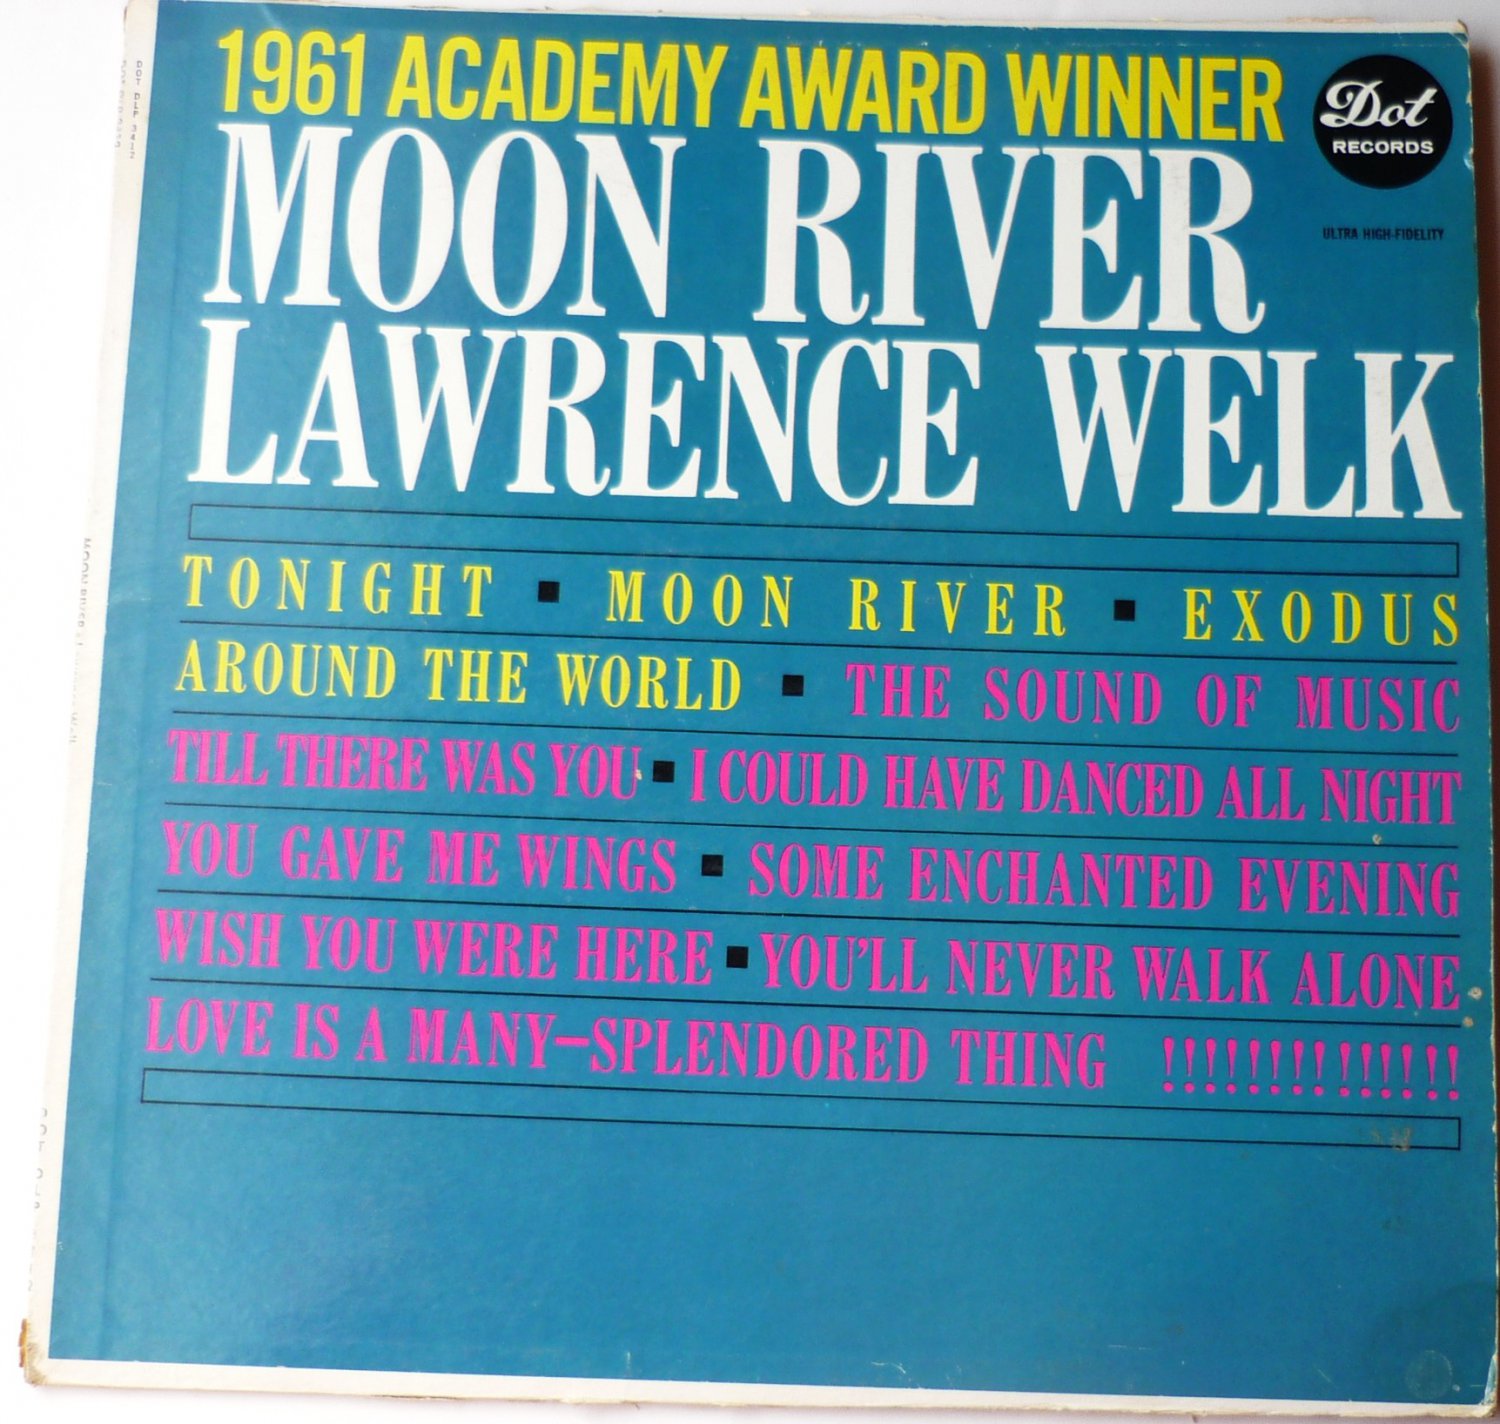 Lawrence Welk Moon River lp